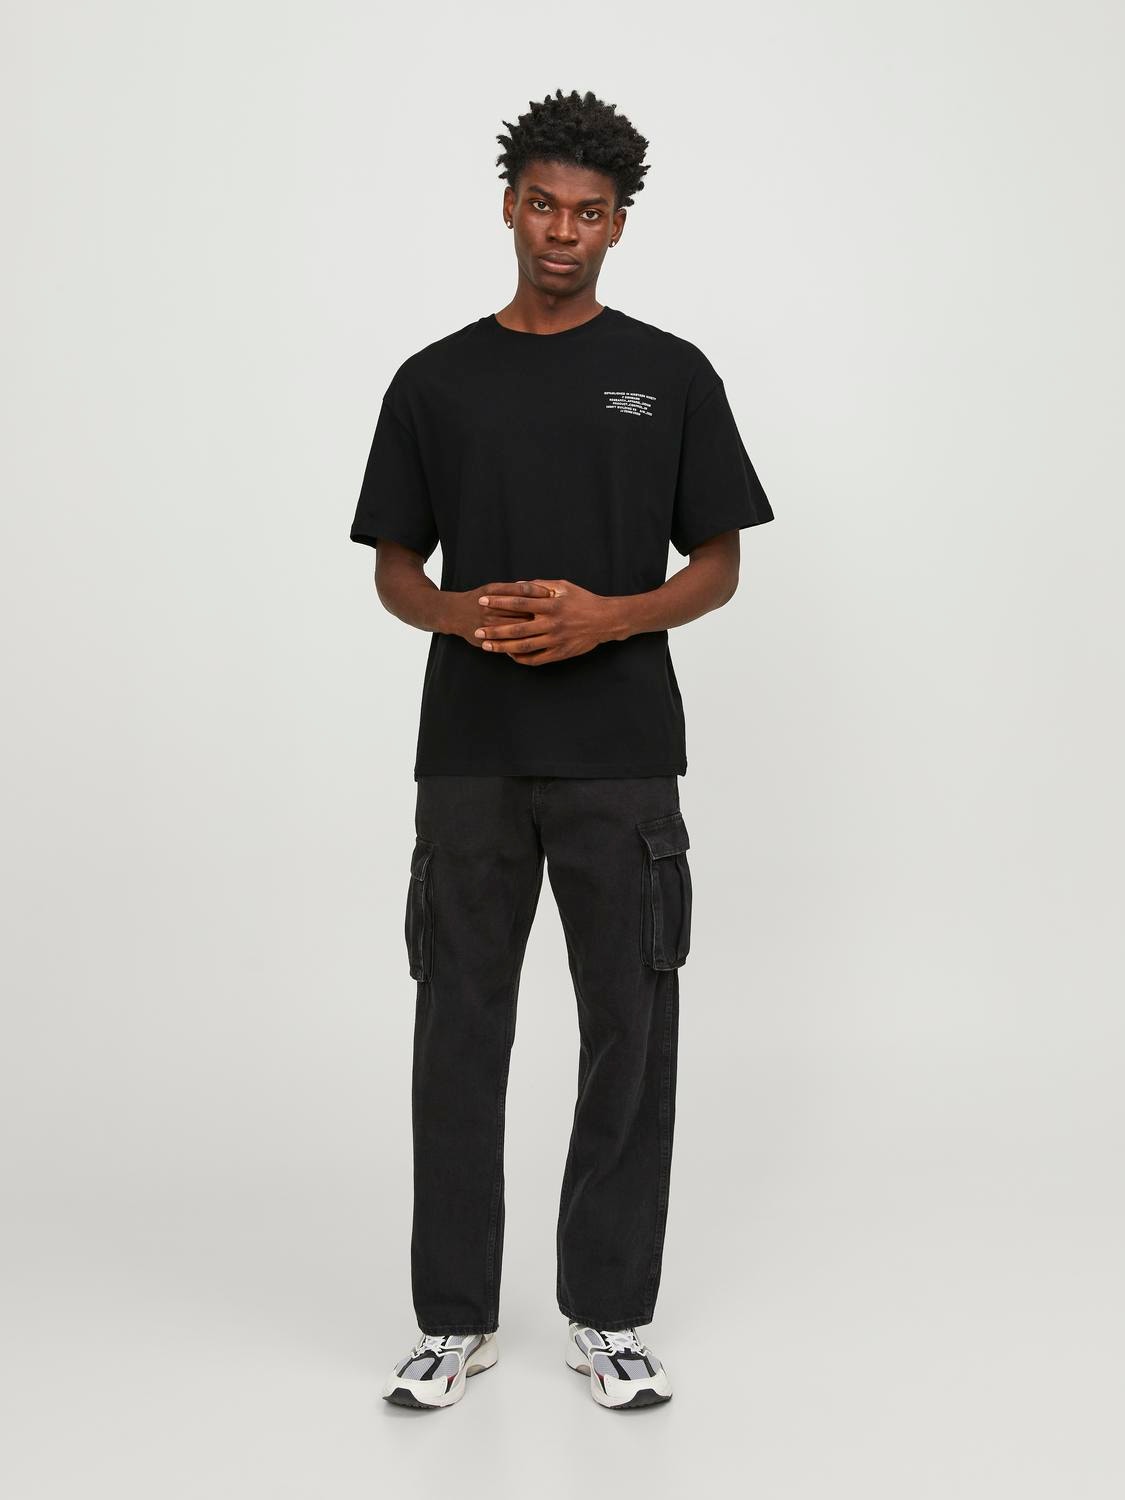 Jack & Jones T-shirt Estampar Decote Redondo -Black - 12250651